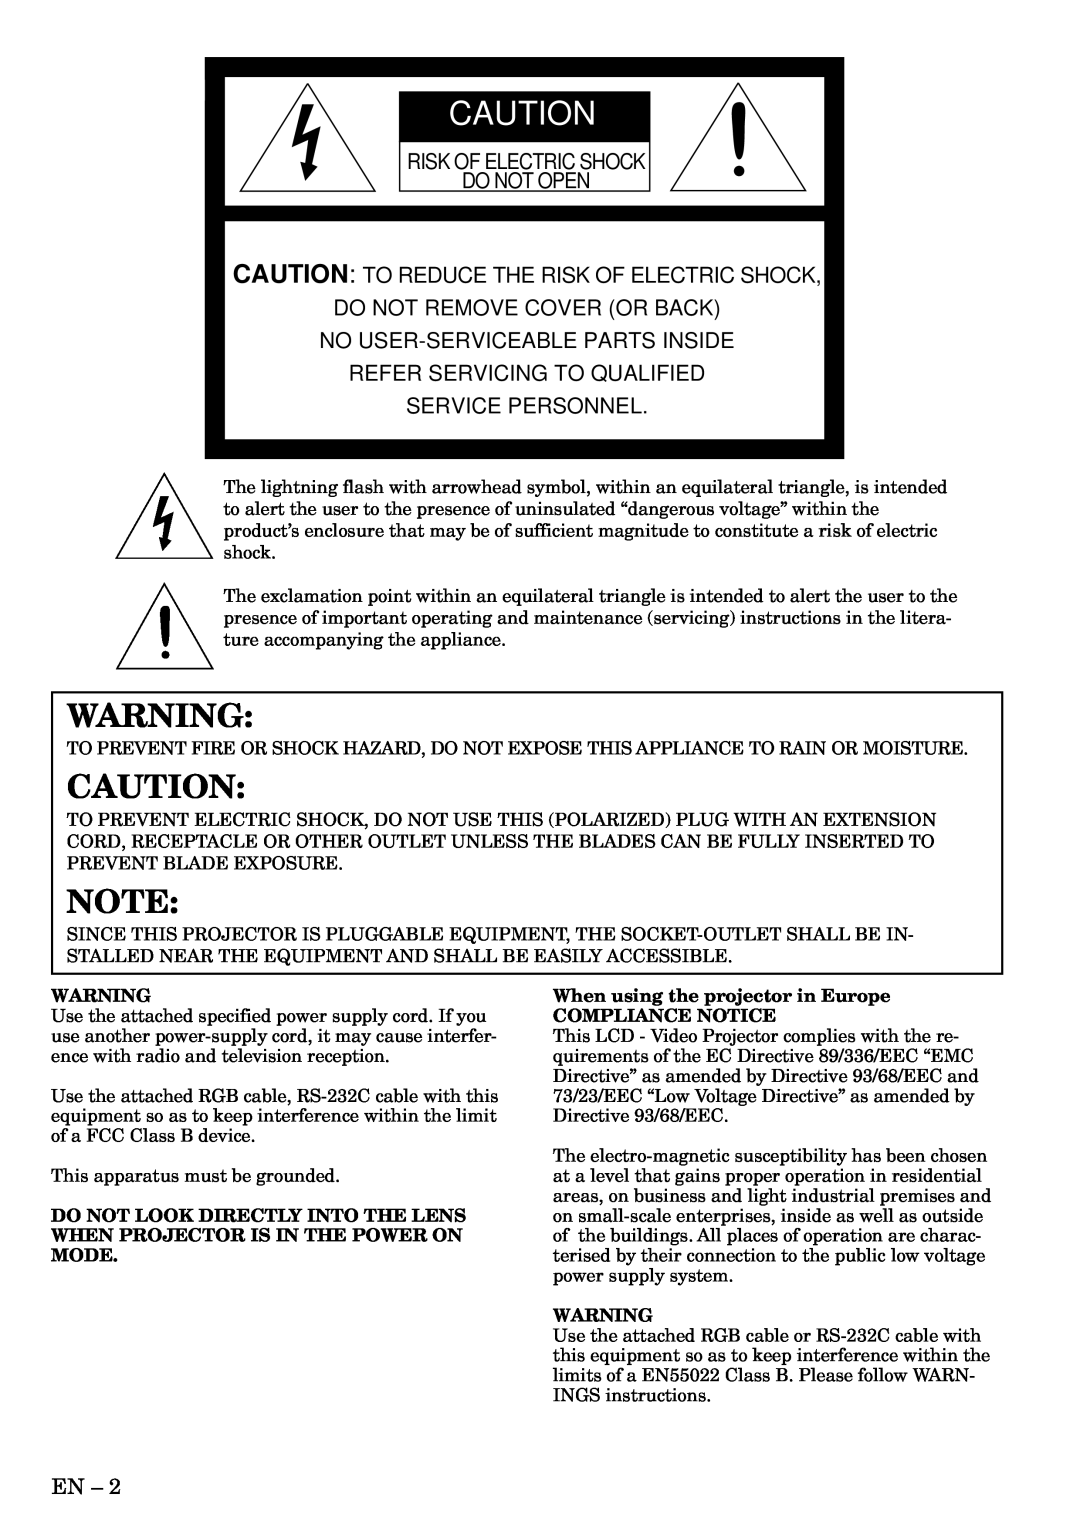 Mitsubishi Electronics XL2U user manual Risk Of Electric Shock Do Not Open, Caution To Reduce The Risk Of Electric Shock 